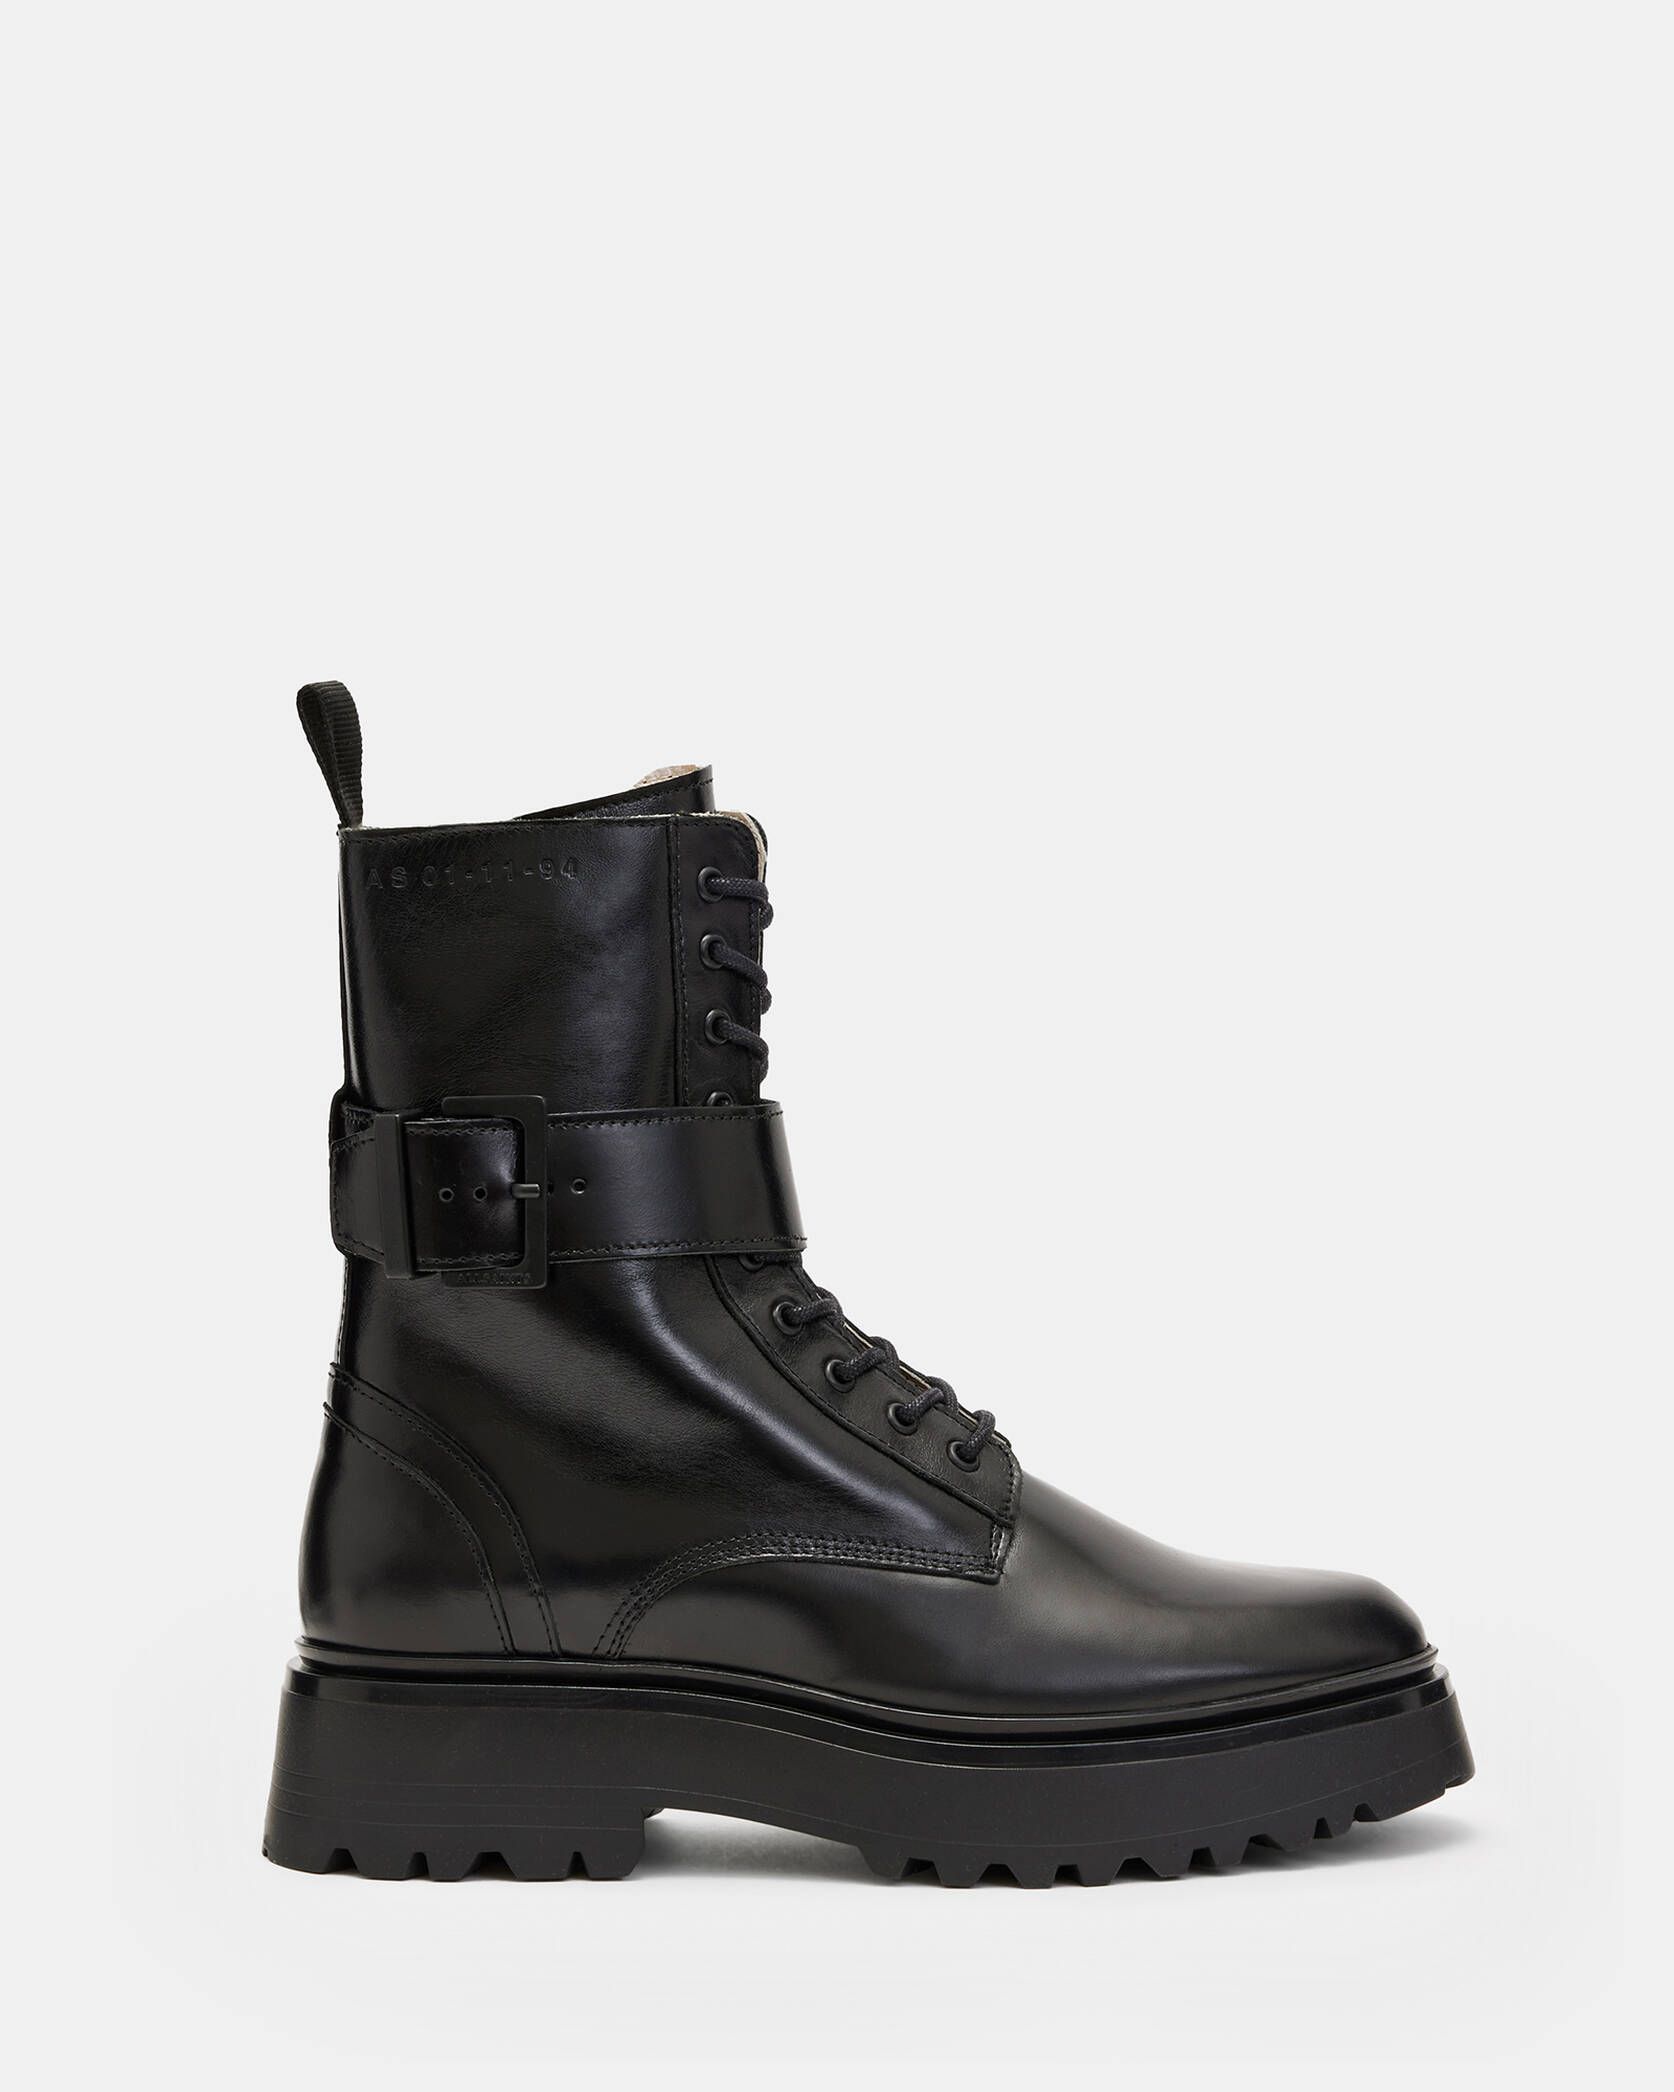 Onyx Leather Boots Black | ALLSAINTS | AllSaints UK